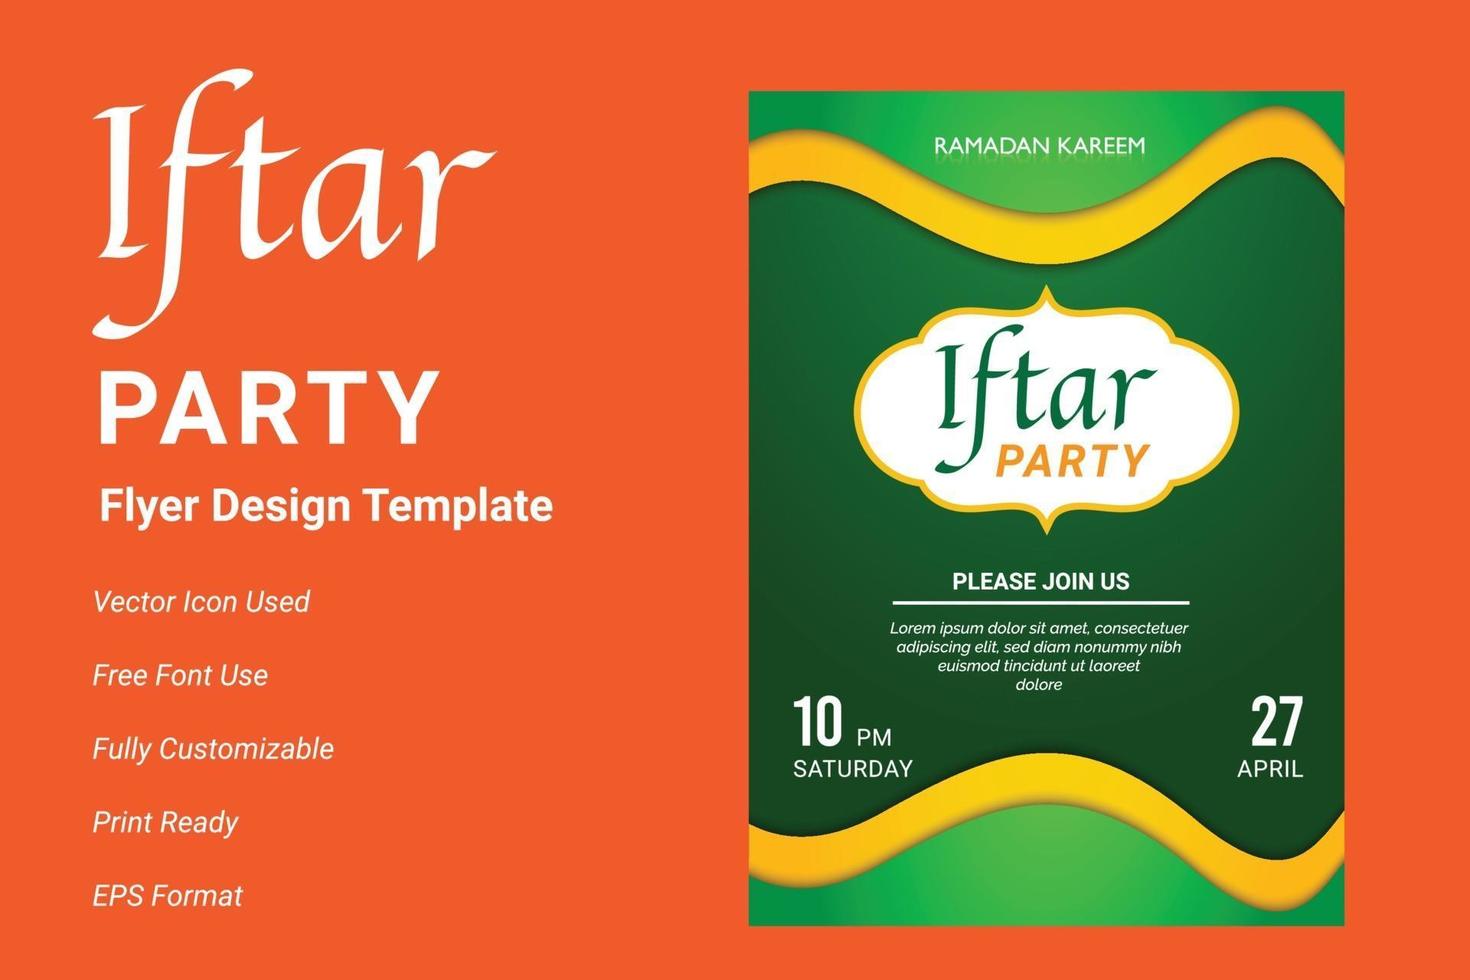 design de folheto de convite de festa ifter. panfleto do ramadã para festa ifter vetor